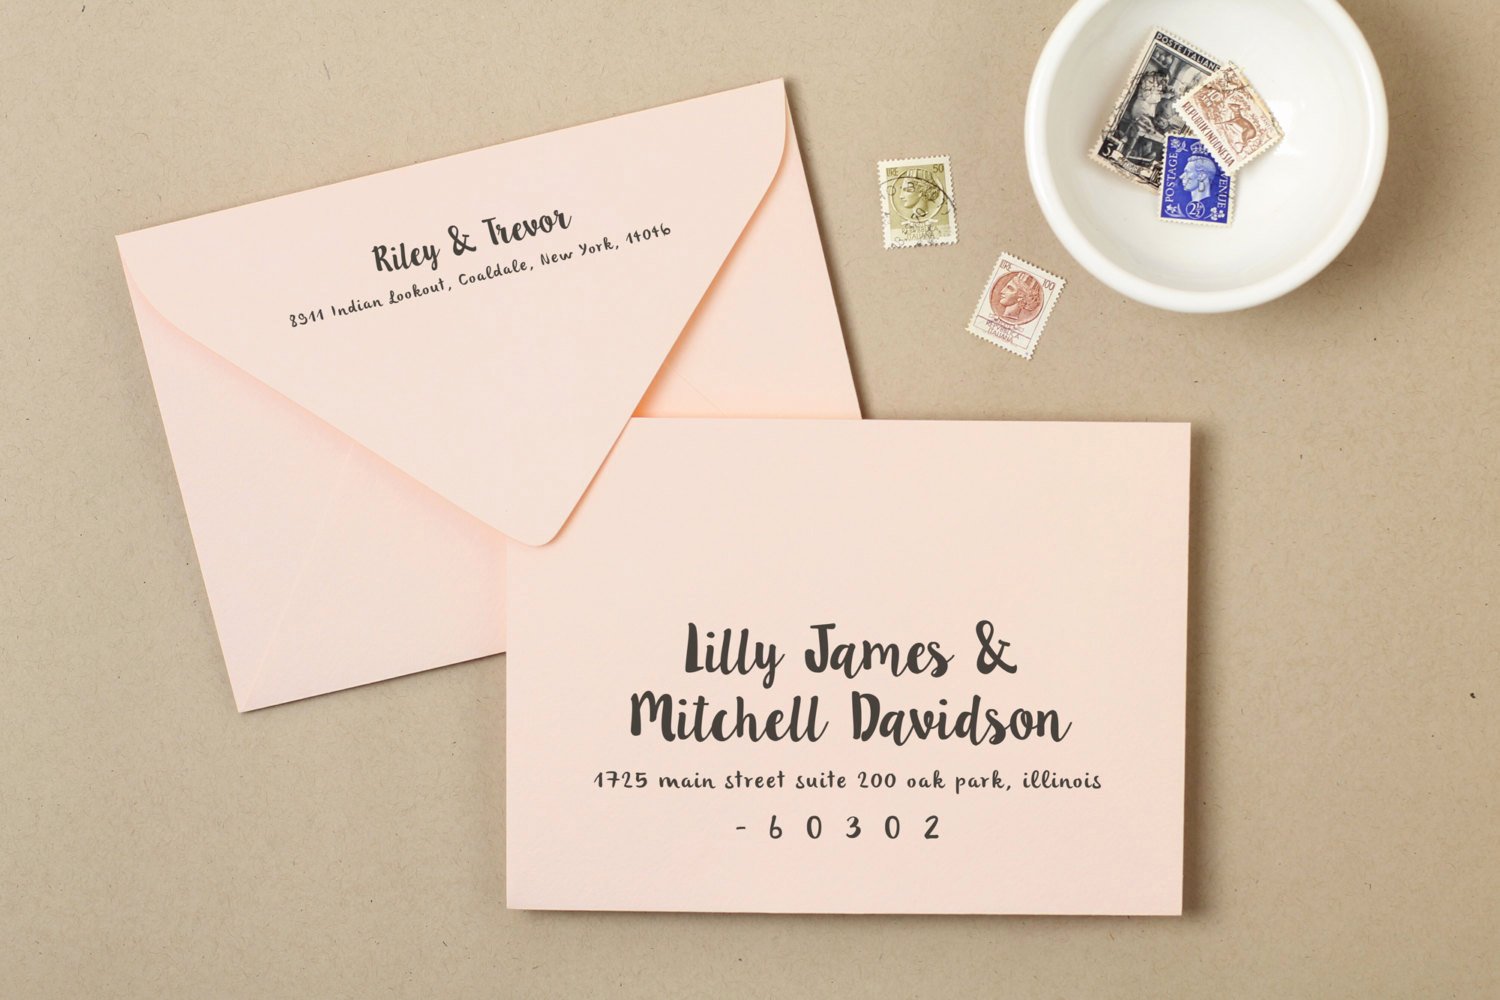 Printable Wedding Envelope Template Instant Download